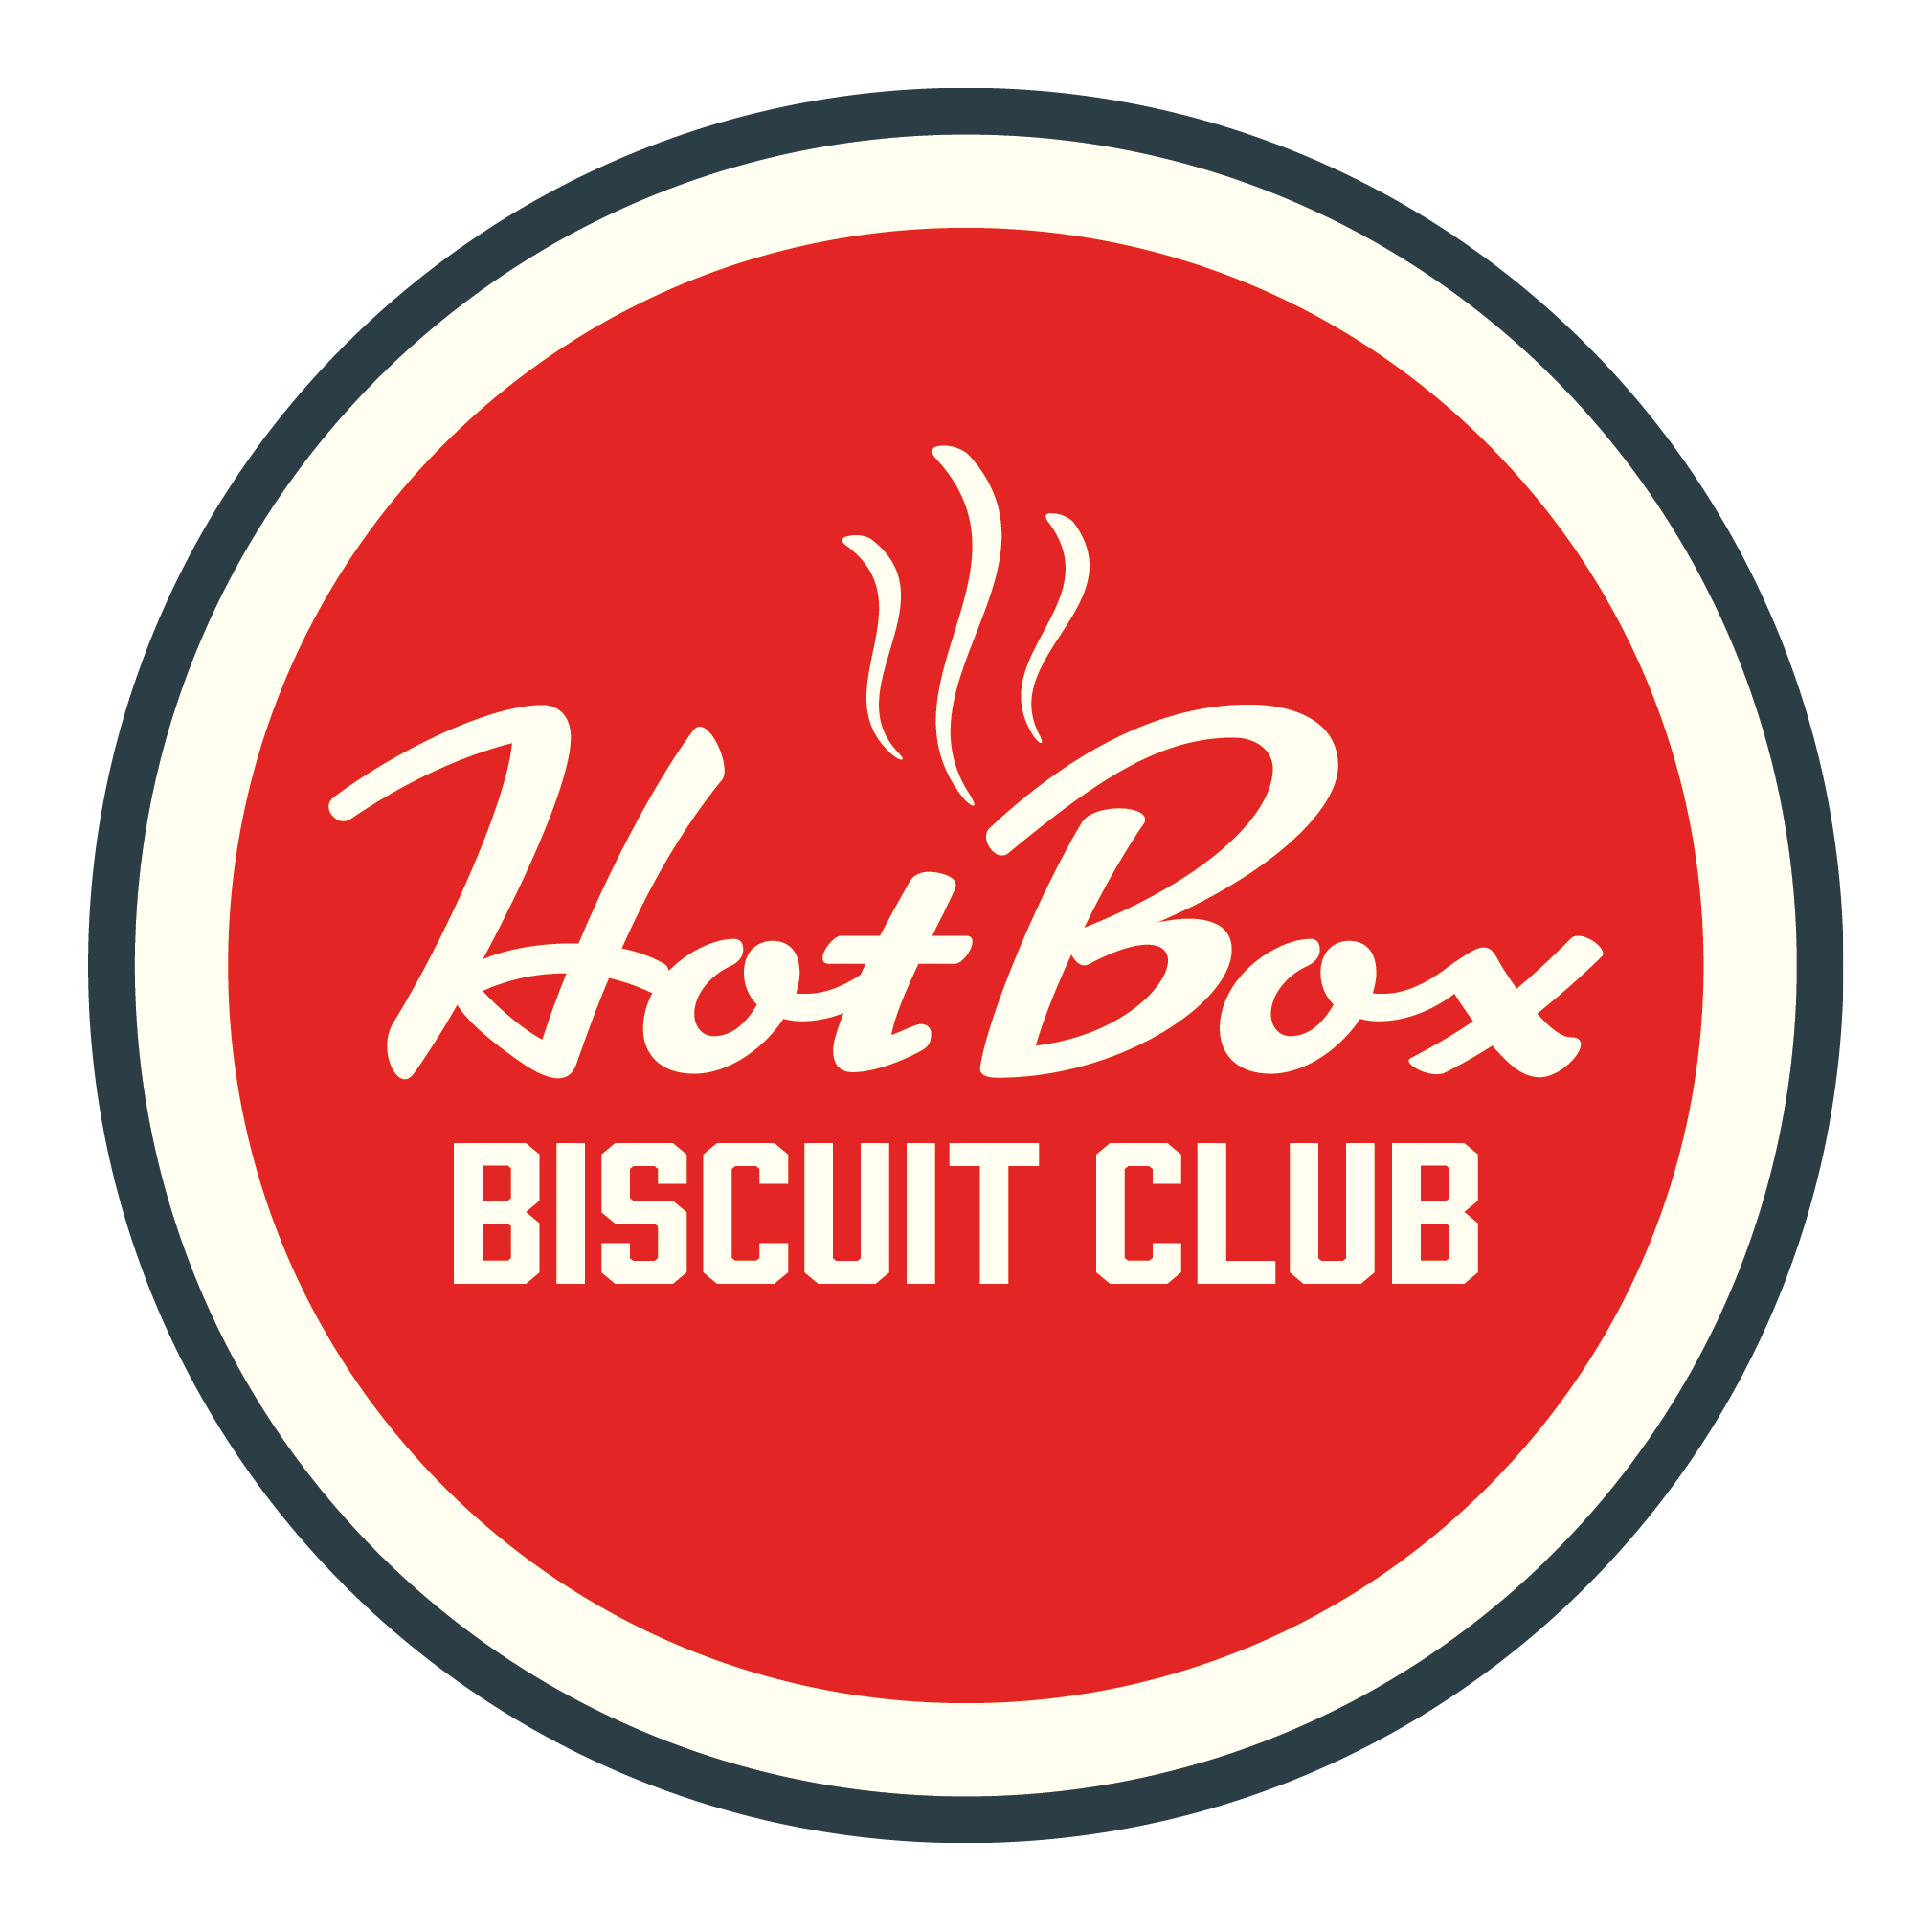 Hot Box Biscuit Club